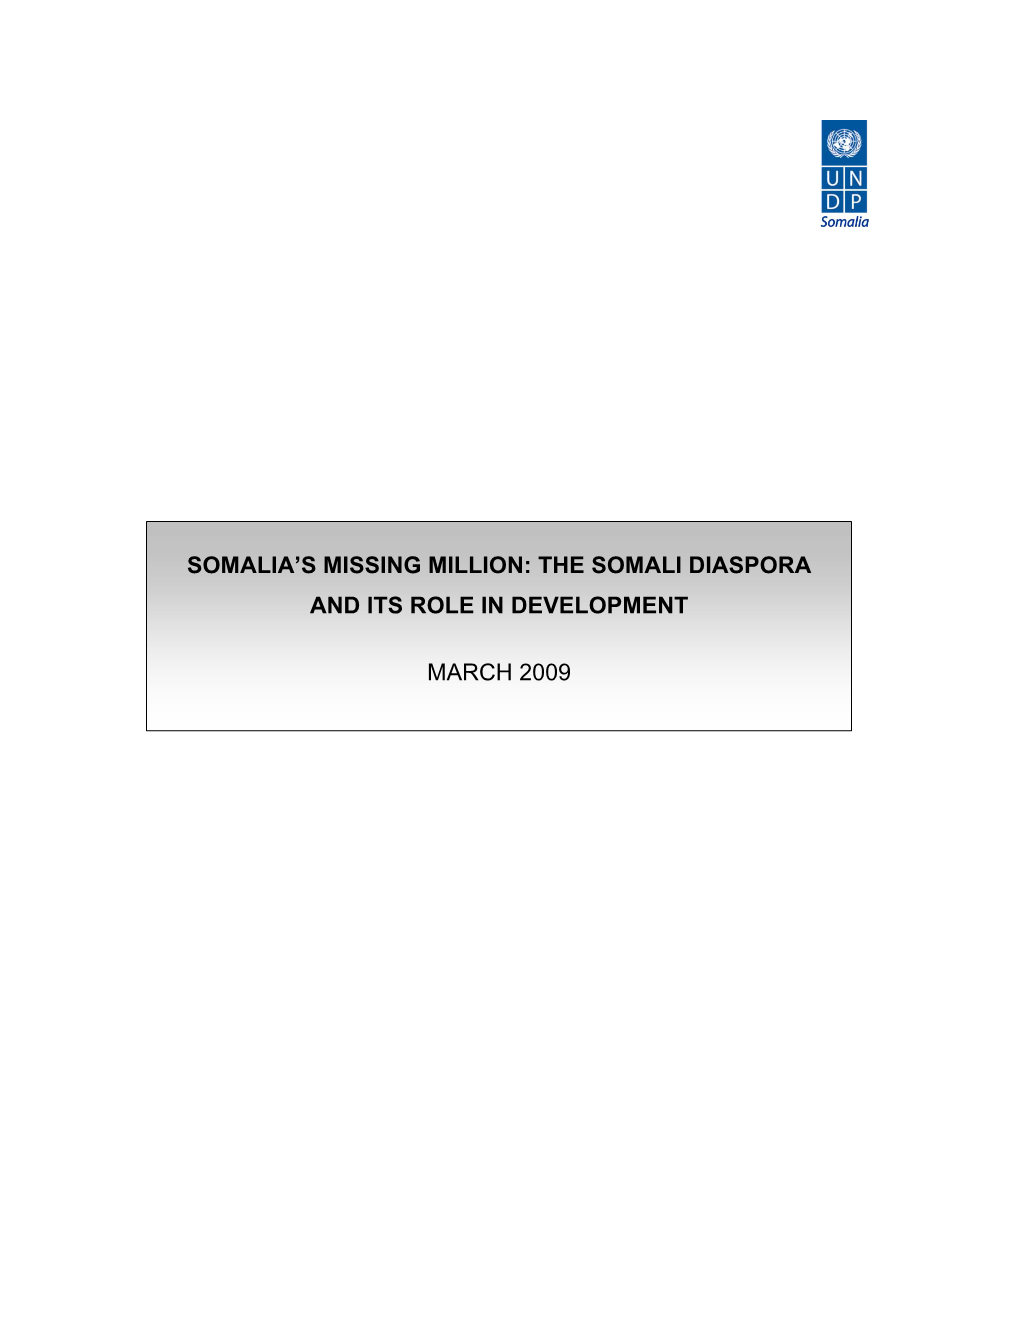 Somalia's Missing Million: the Somali Diaspora and Its Role in Development